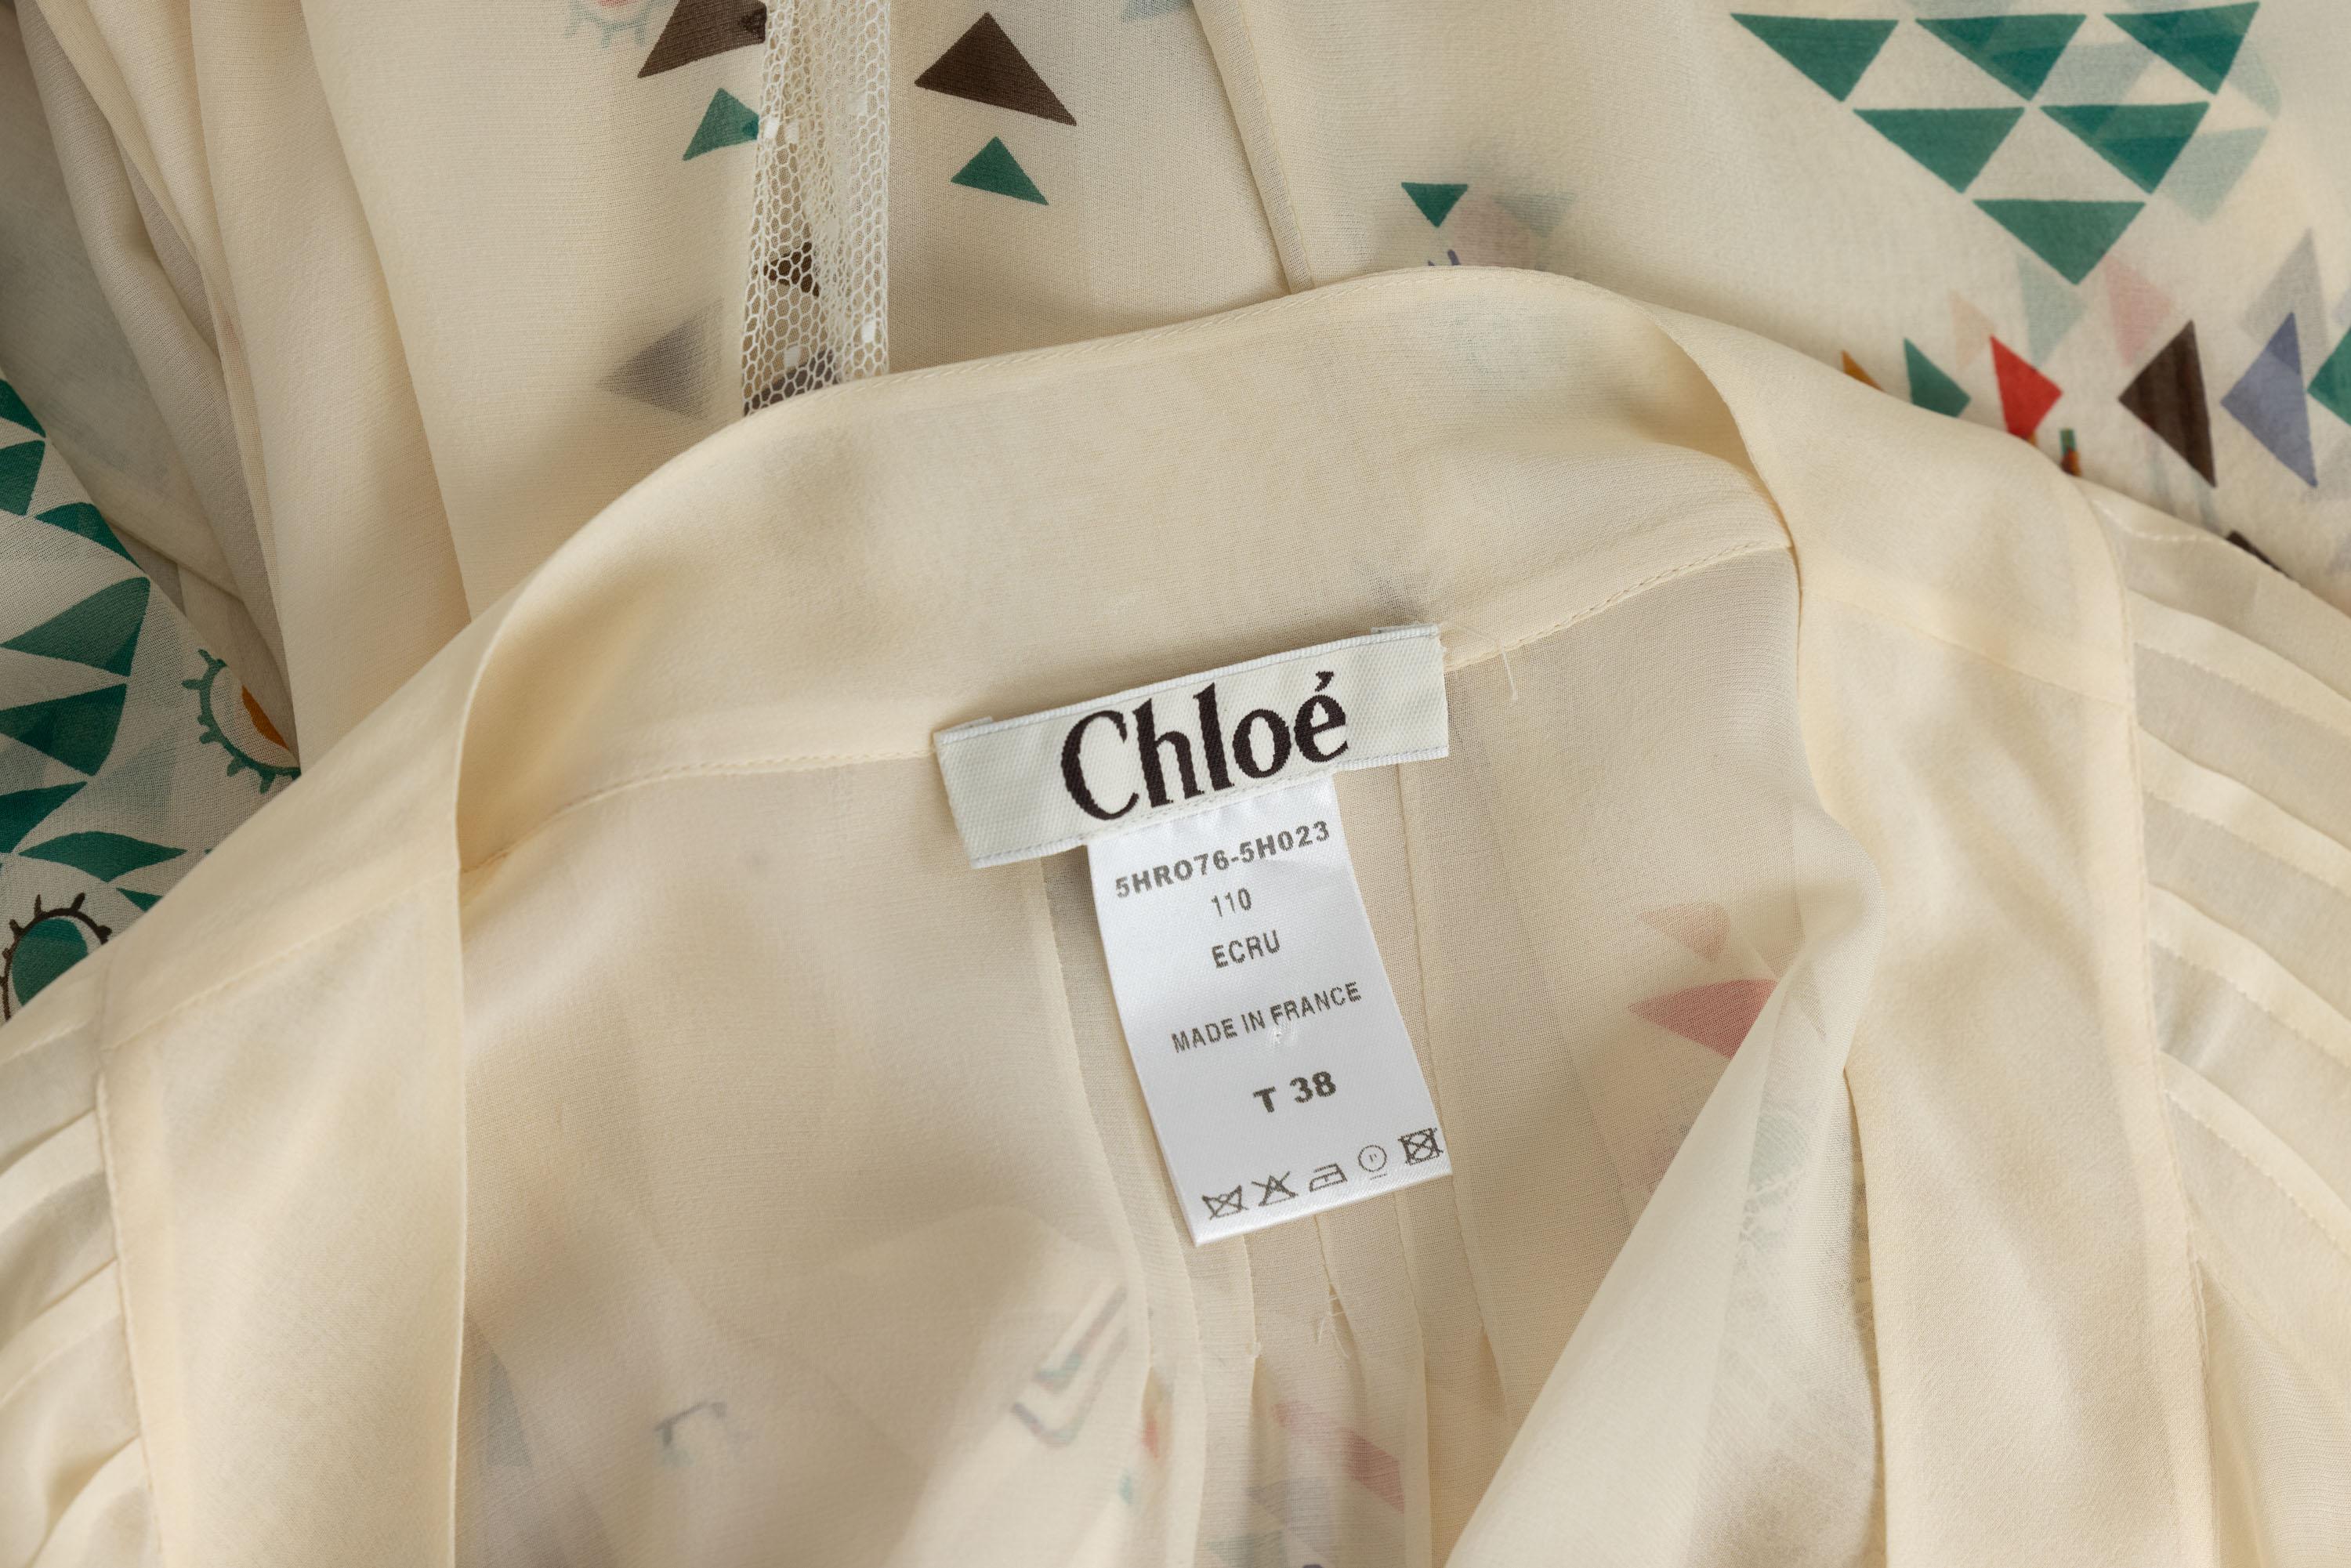 Chloé Phoebe Philo Limited Edition Silk Dress Fall 2005 4